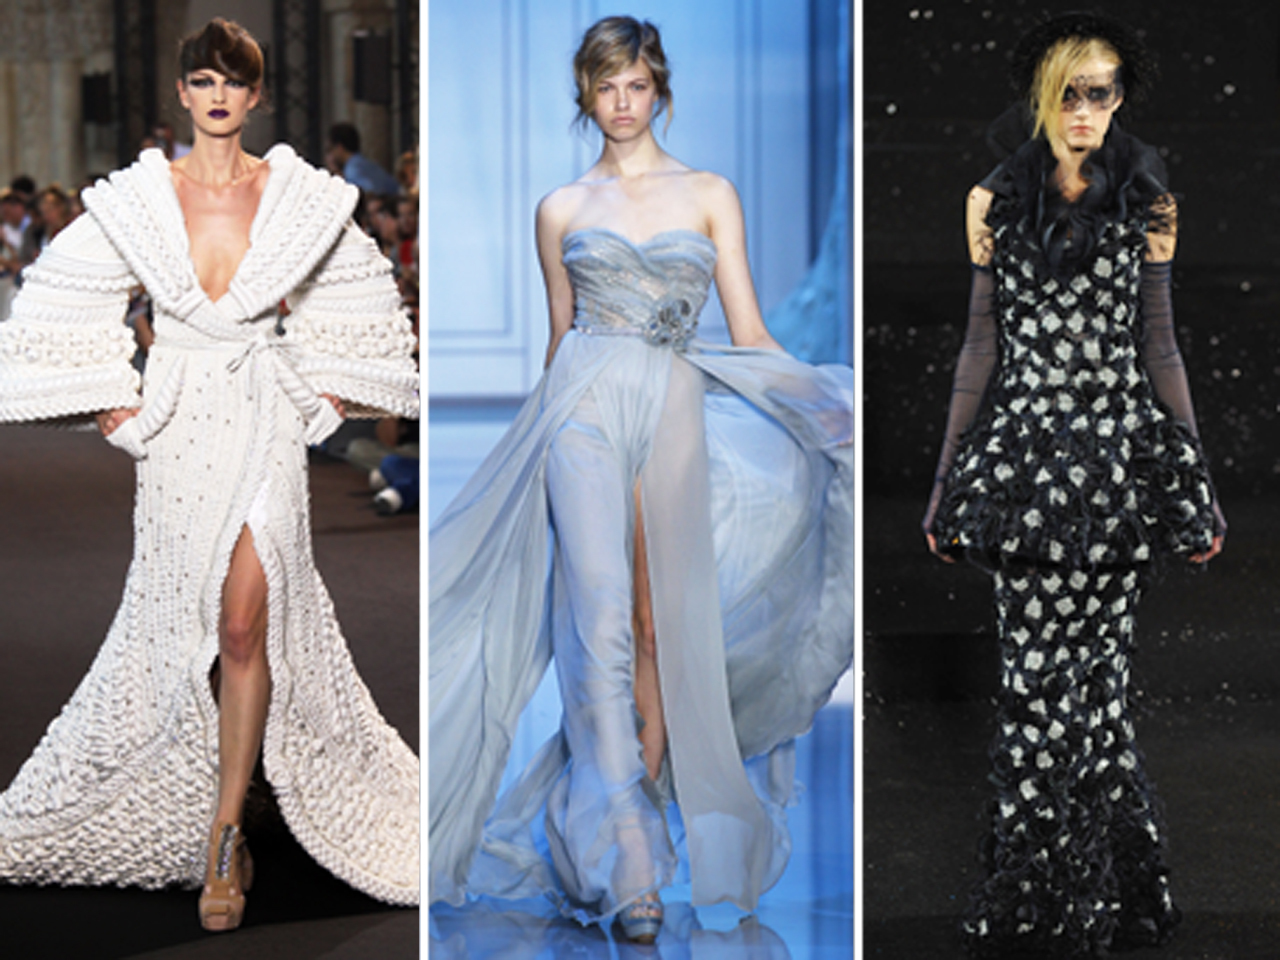 Fashions sparkle at Paris Haute Couture week - CBS News